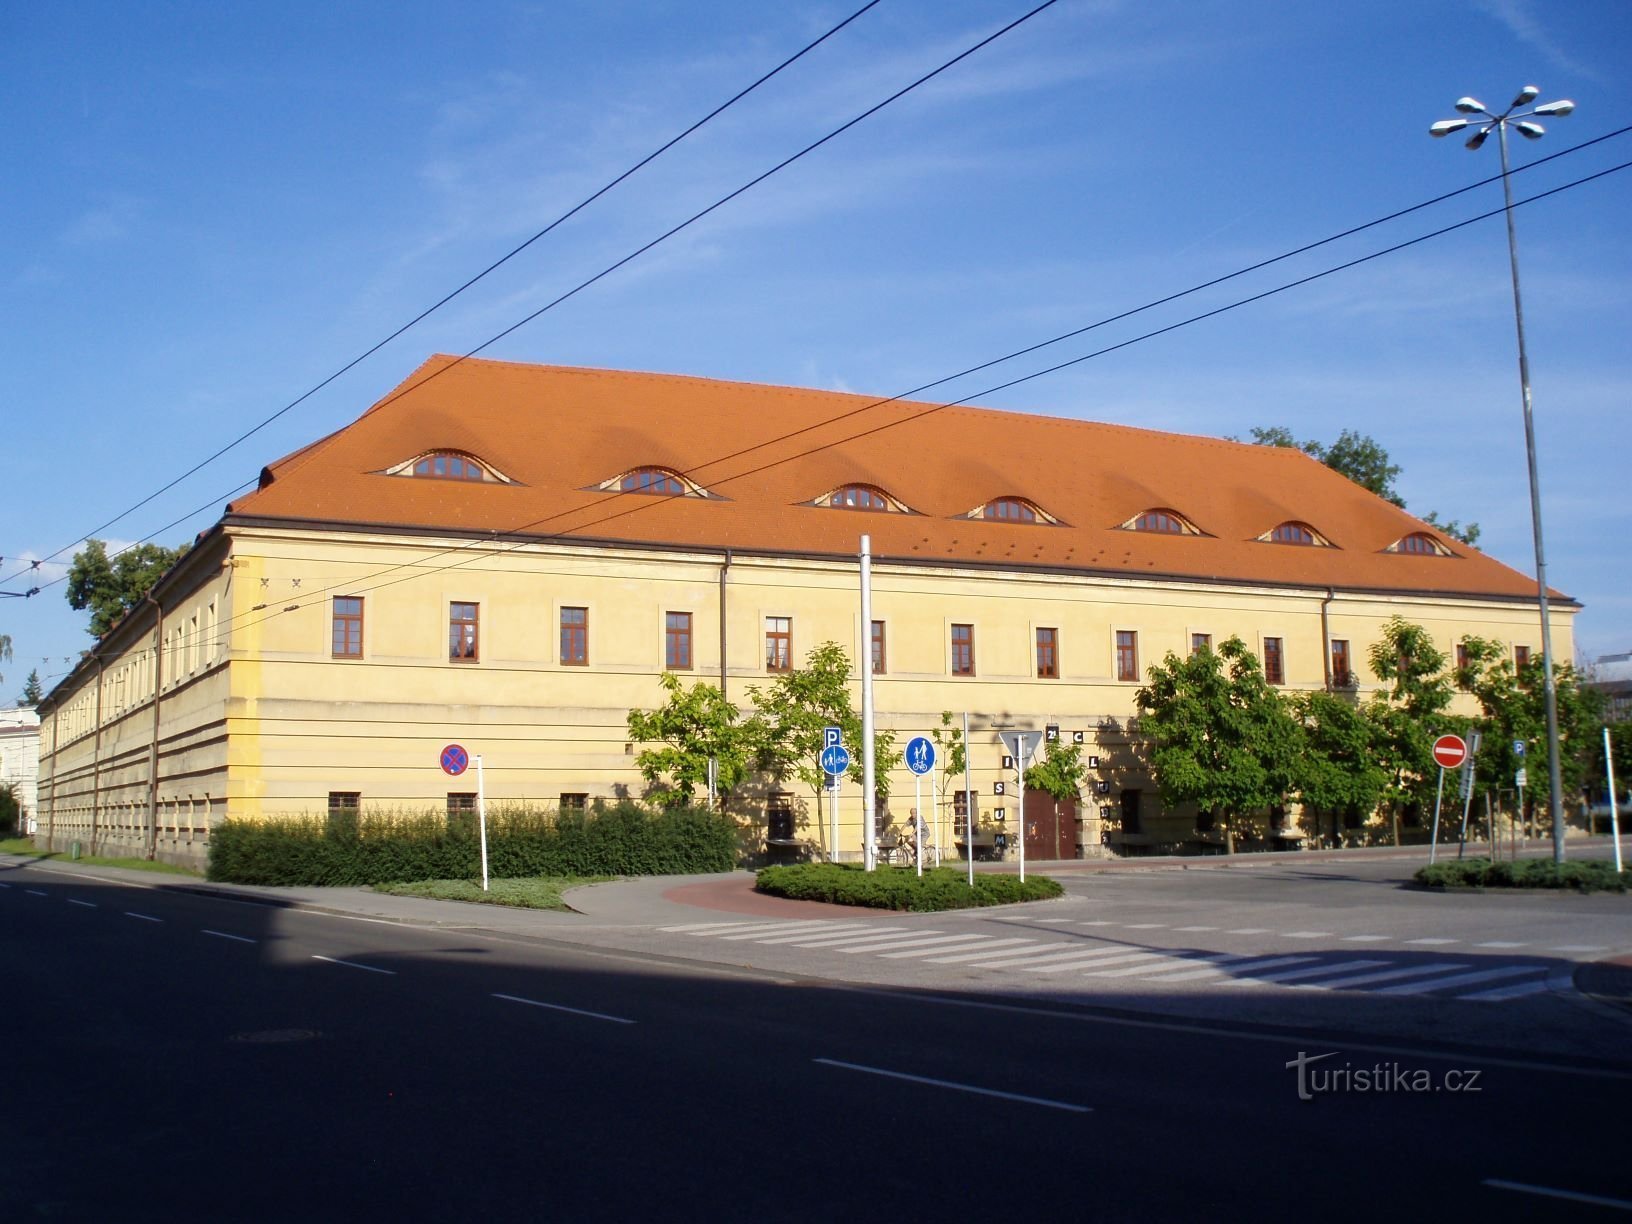 Cuartel de caballería (Hradec Králové, 16.7.2011 de abril de XNUMX)